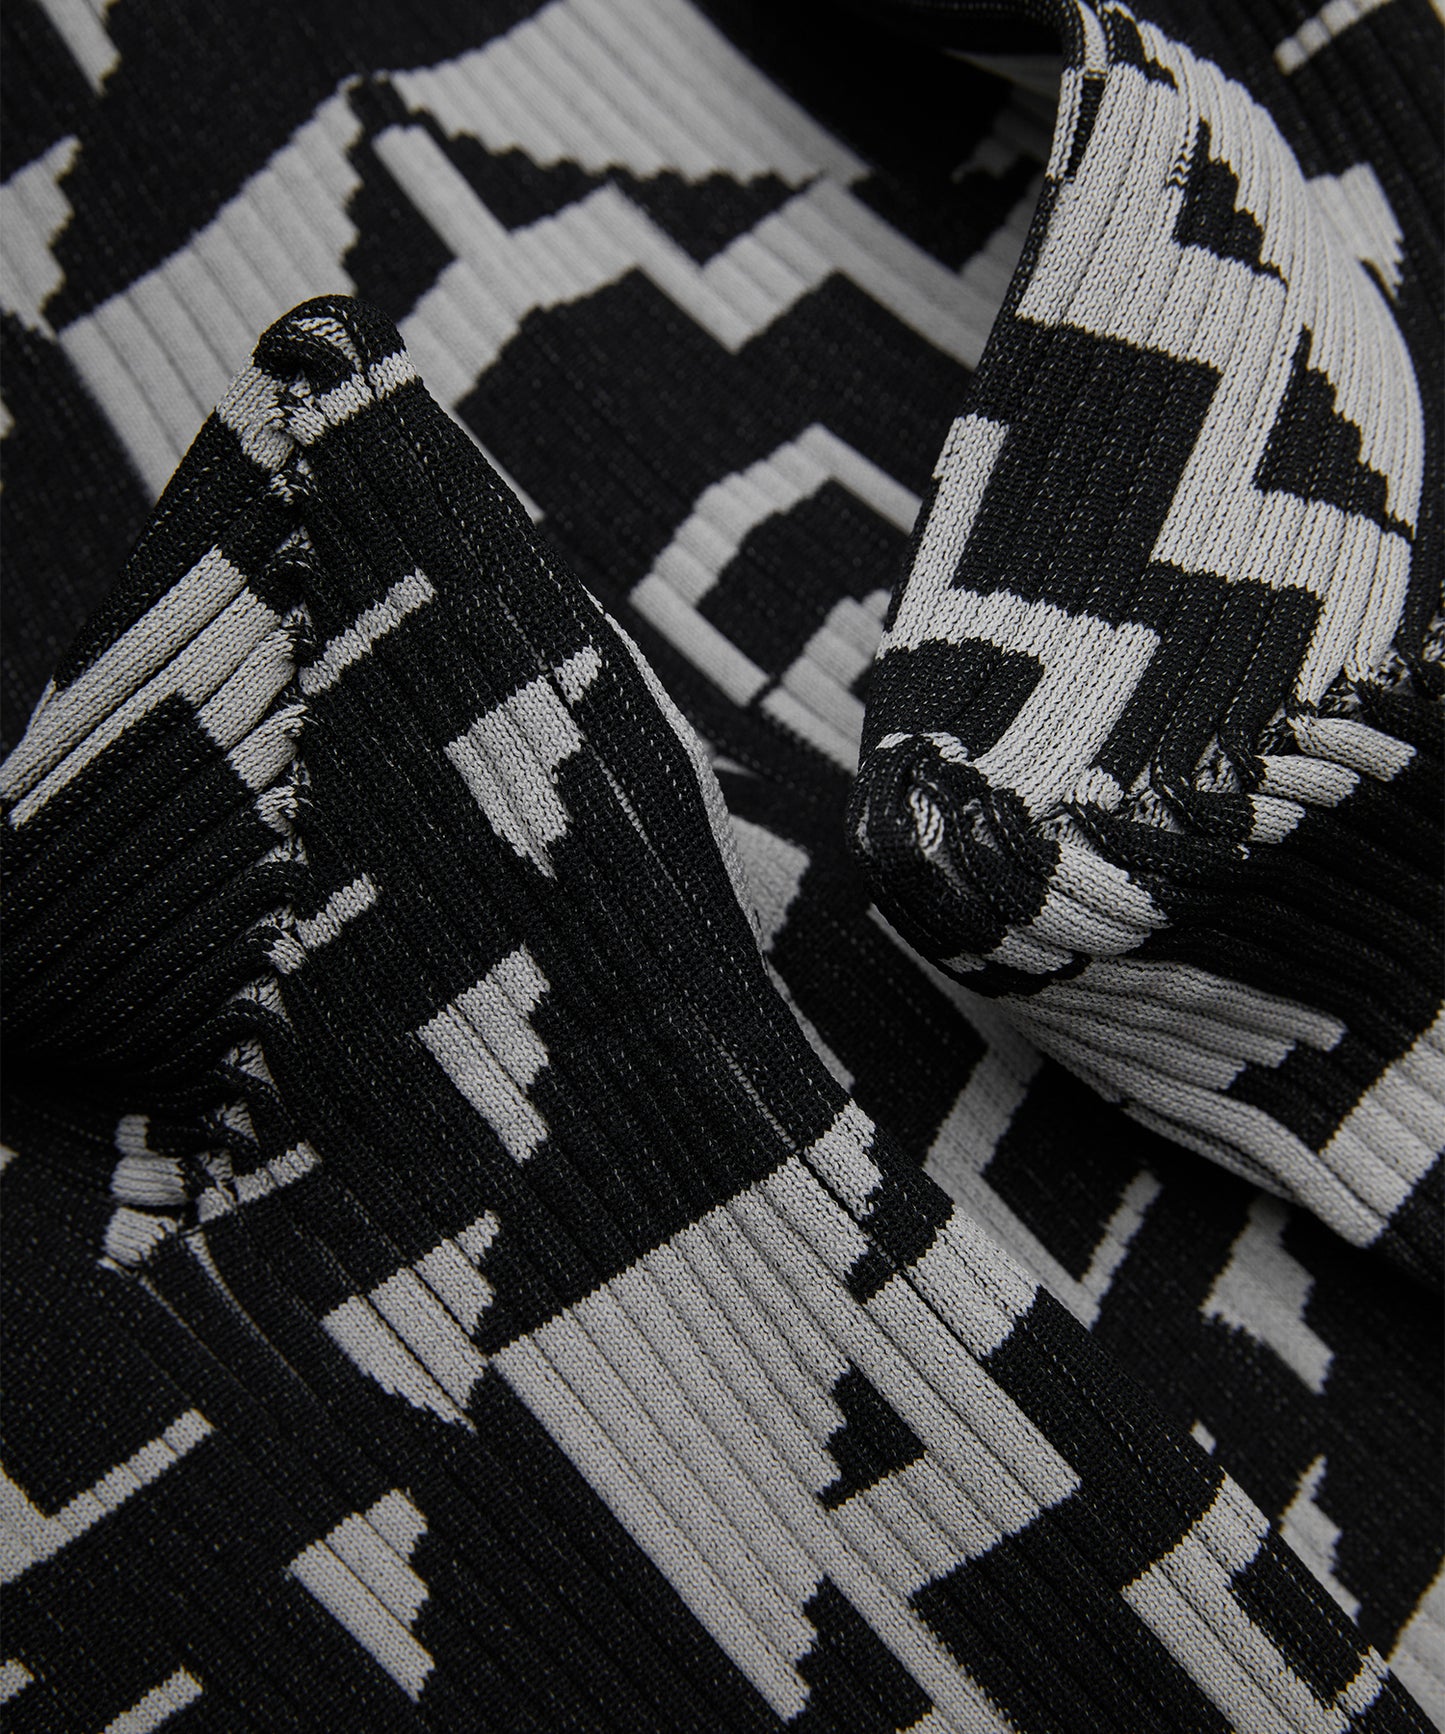 African Geometric 3D Polyester Dress